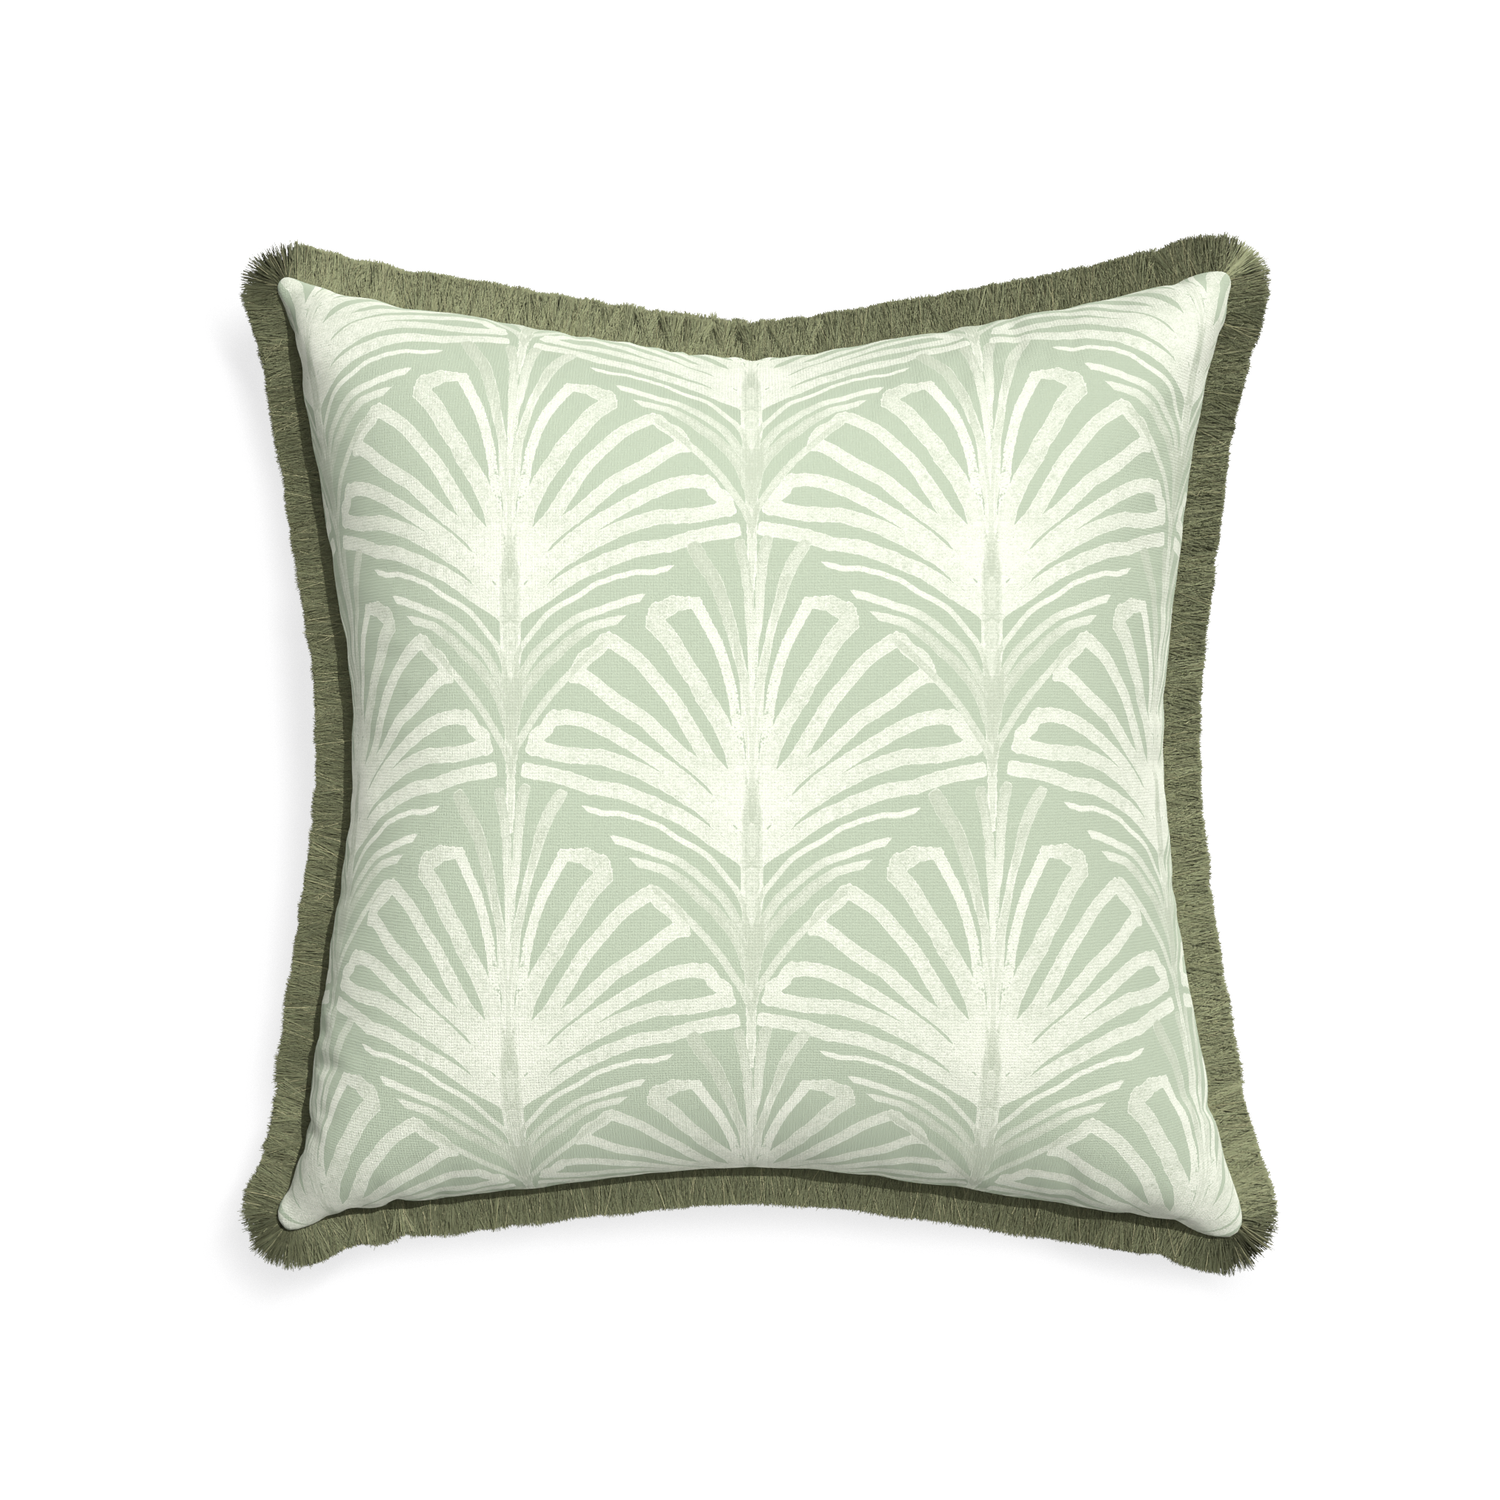 22-square suzy sage custom pillow with sage fringe on white background